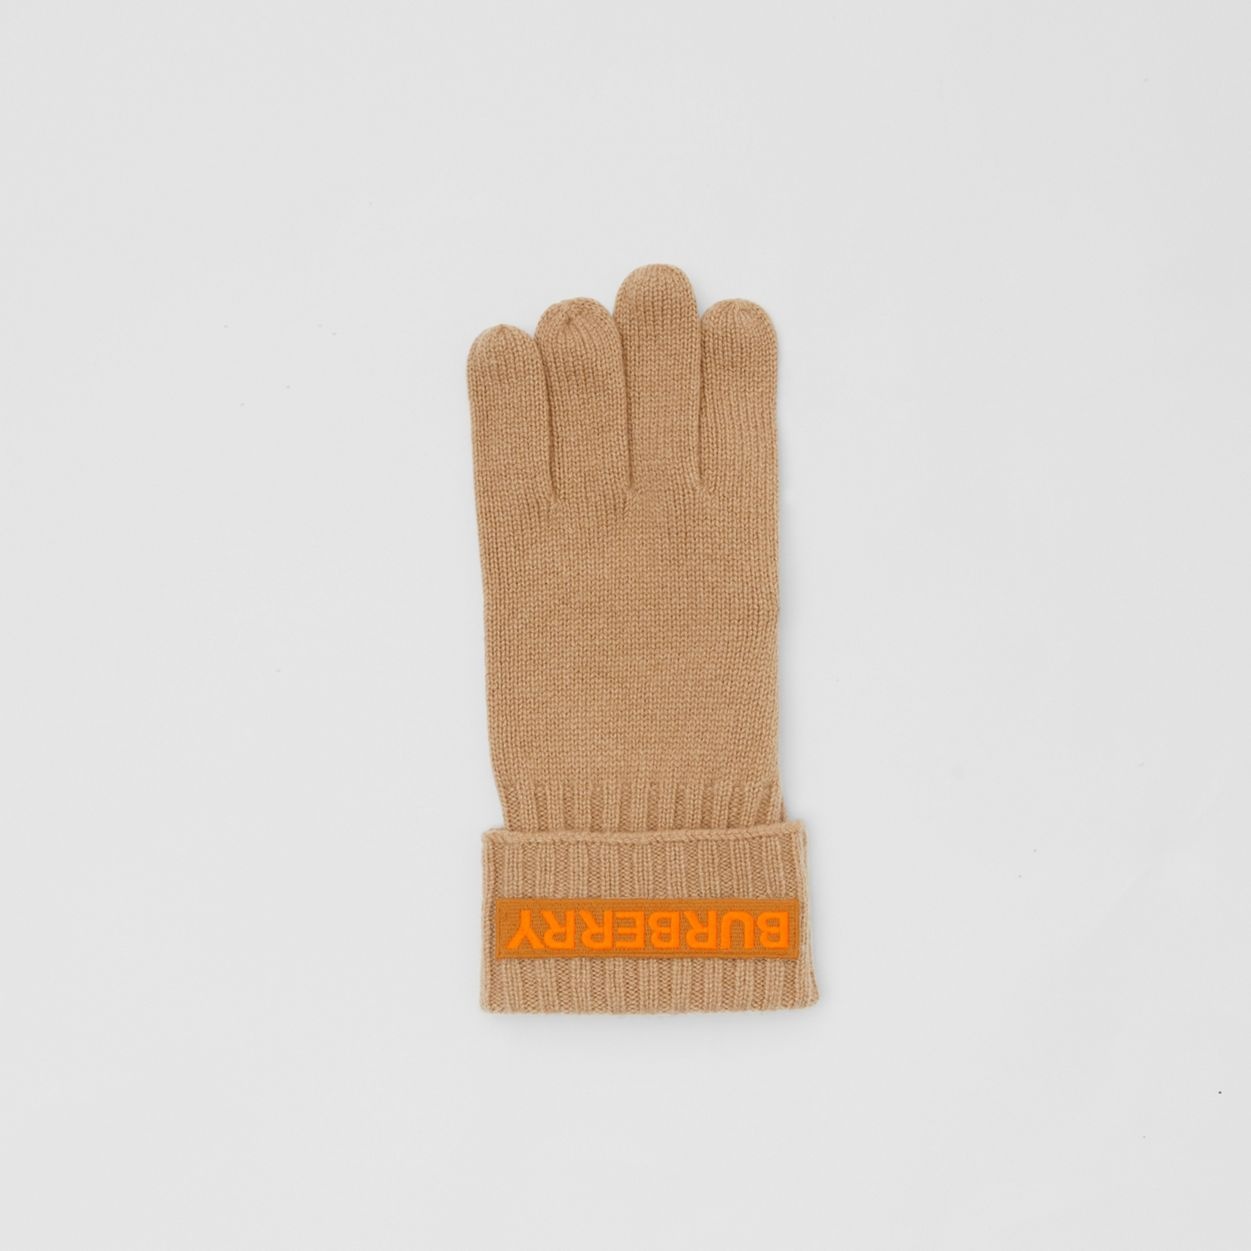 Kingdom and Logo Appliqué Cashmere Gloves - 3